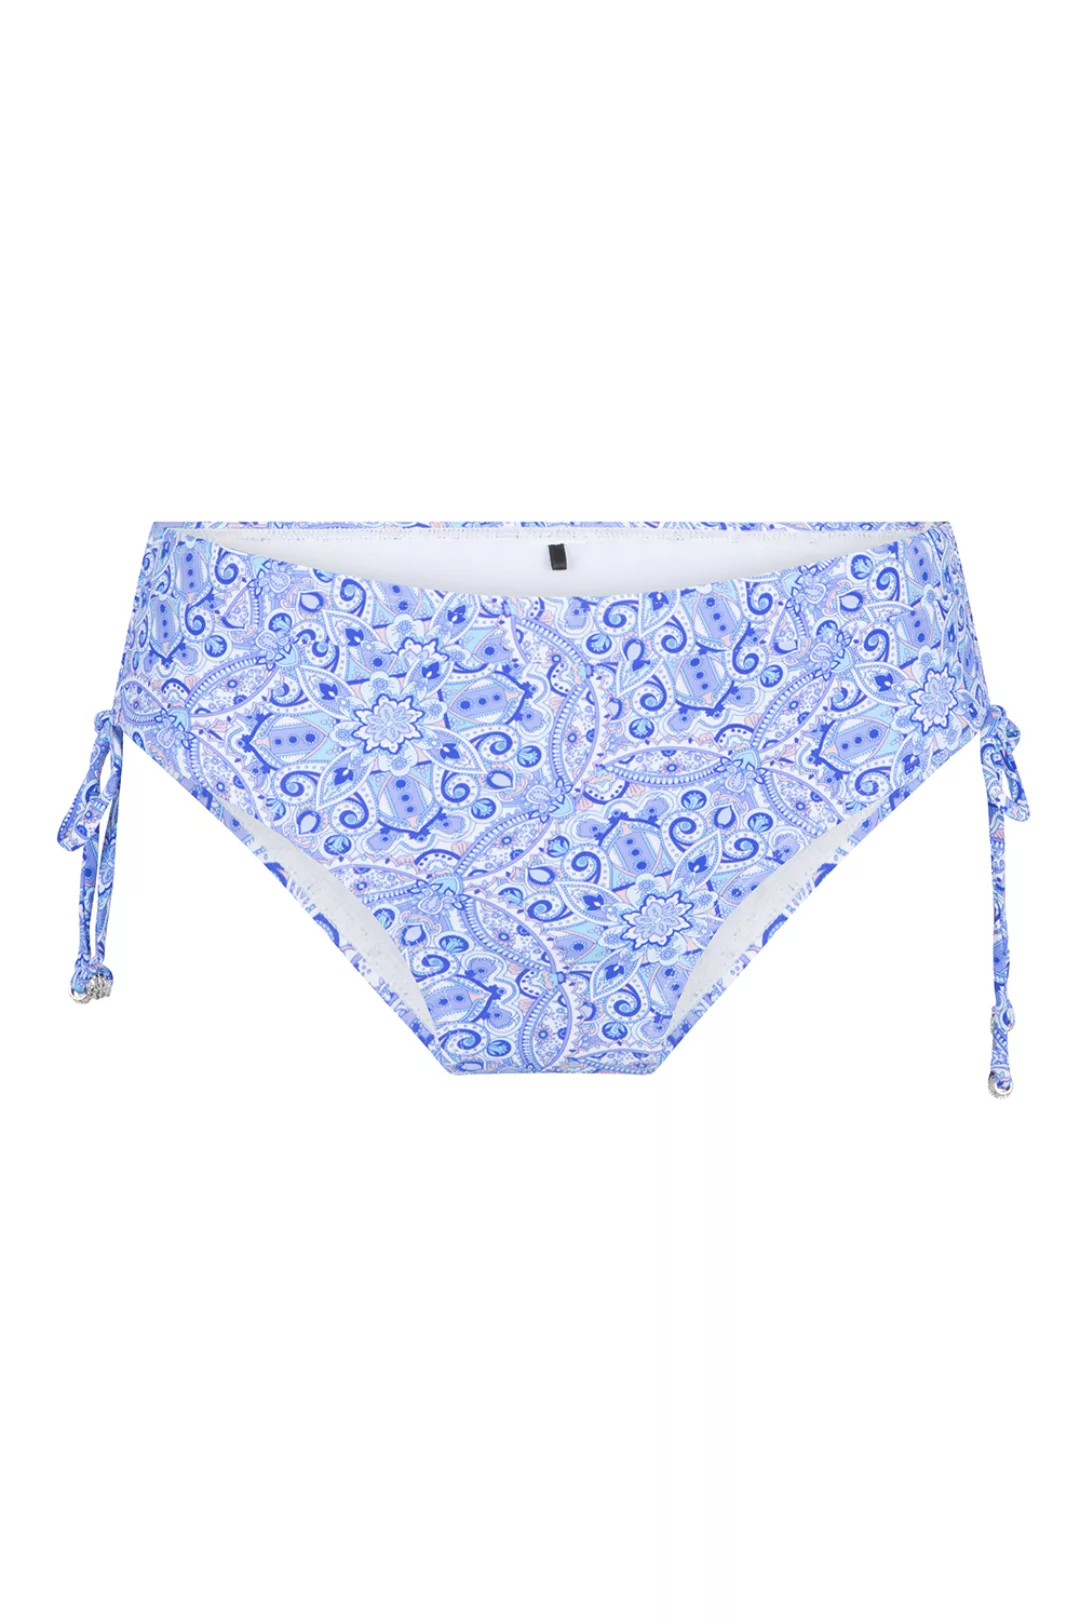 LingaDore Bikini Shorty Blue Paisley 42 blau günstig online kaufen